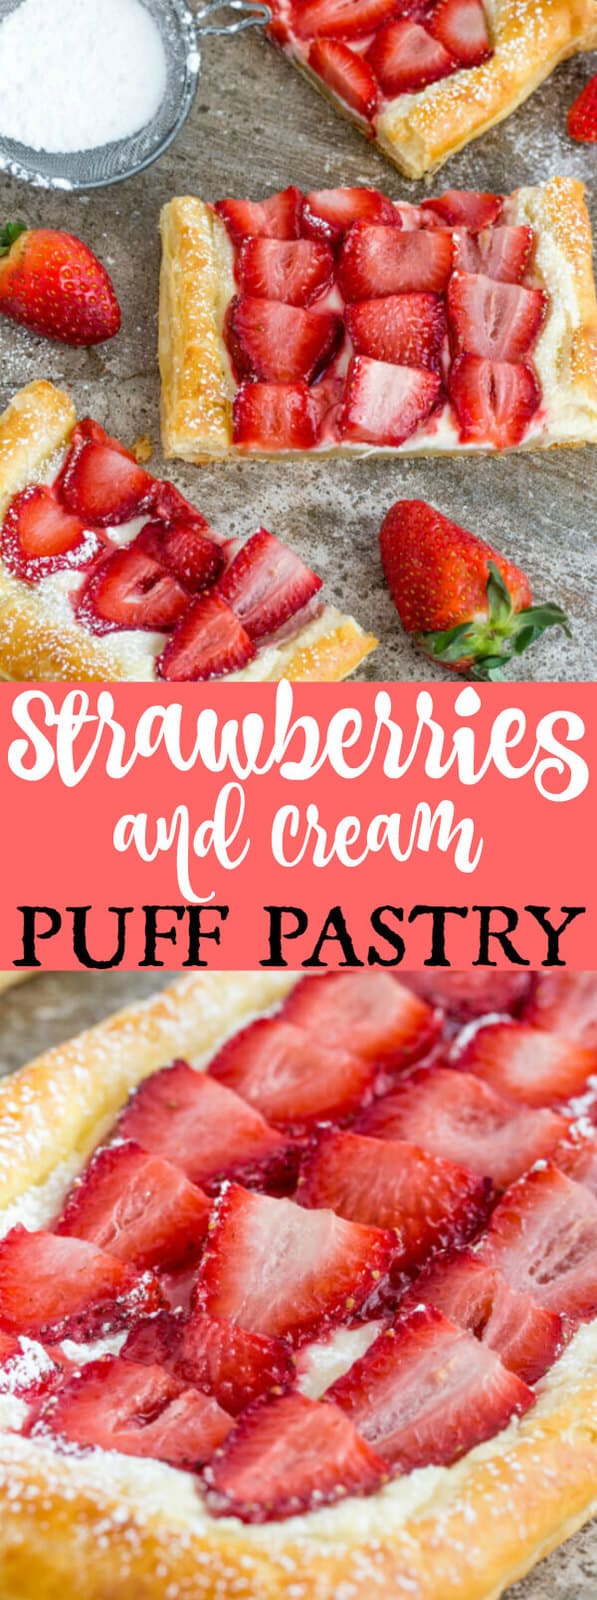 Strawberries and Cream Puff Pastry